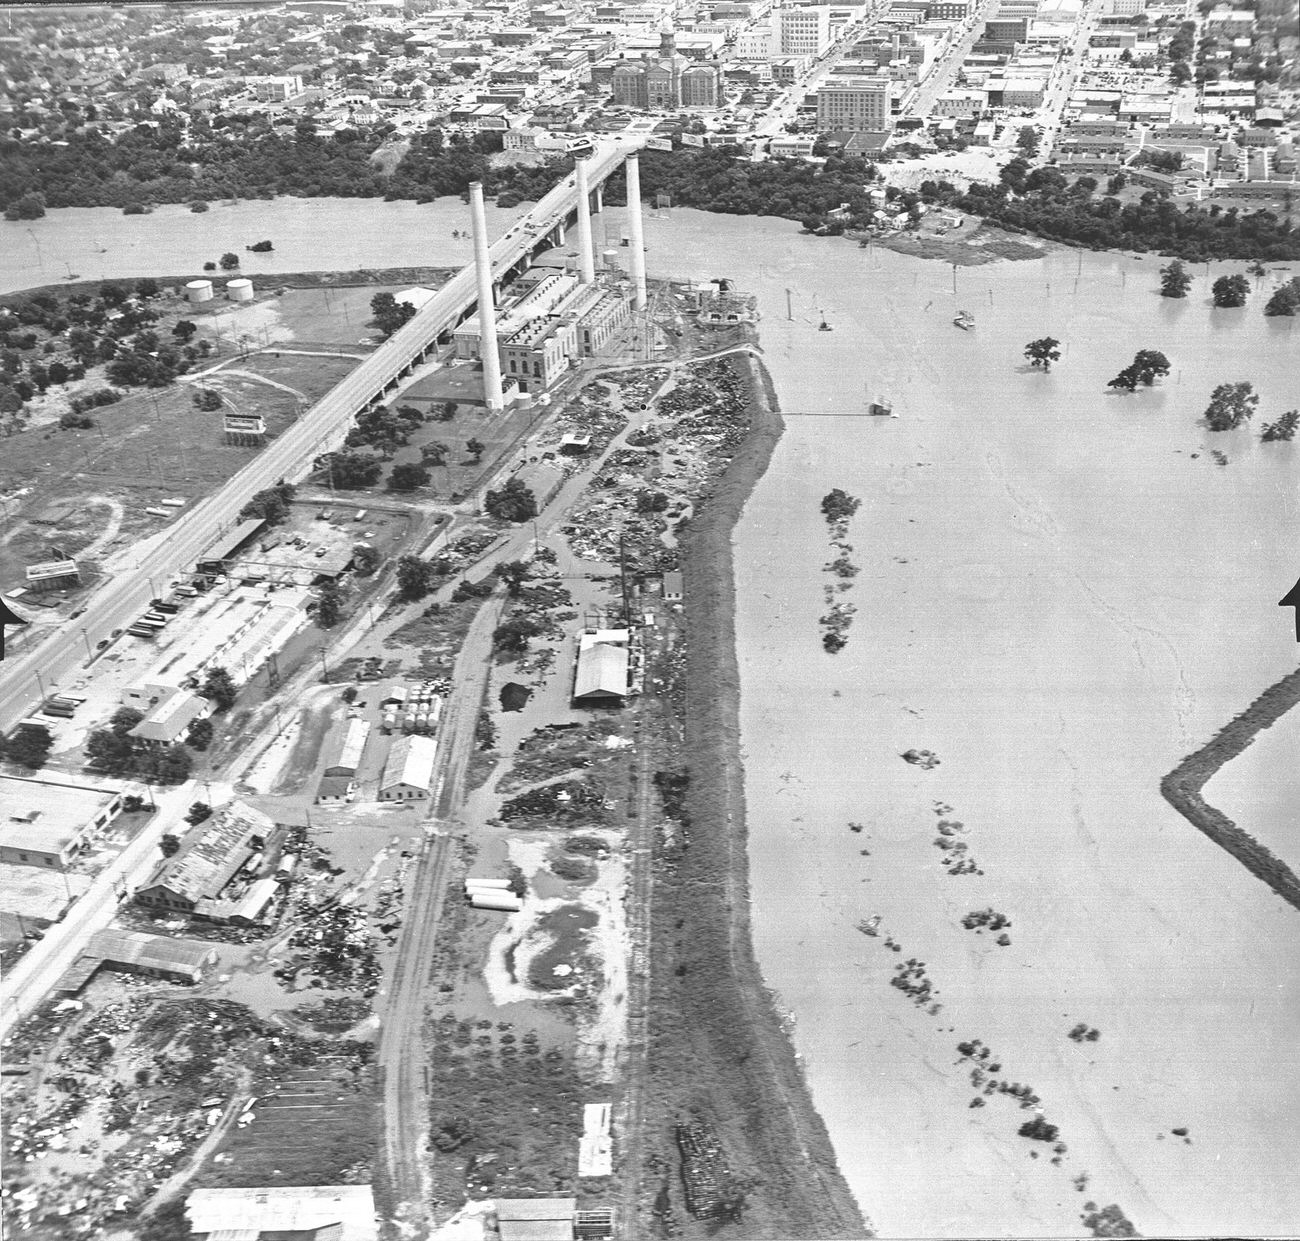 Fort Worth, Texas flood, 1949